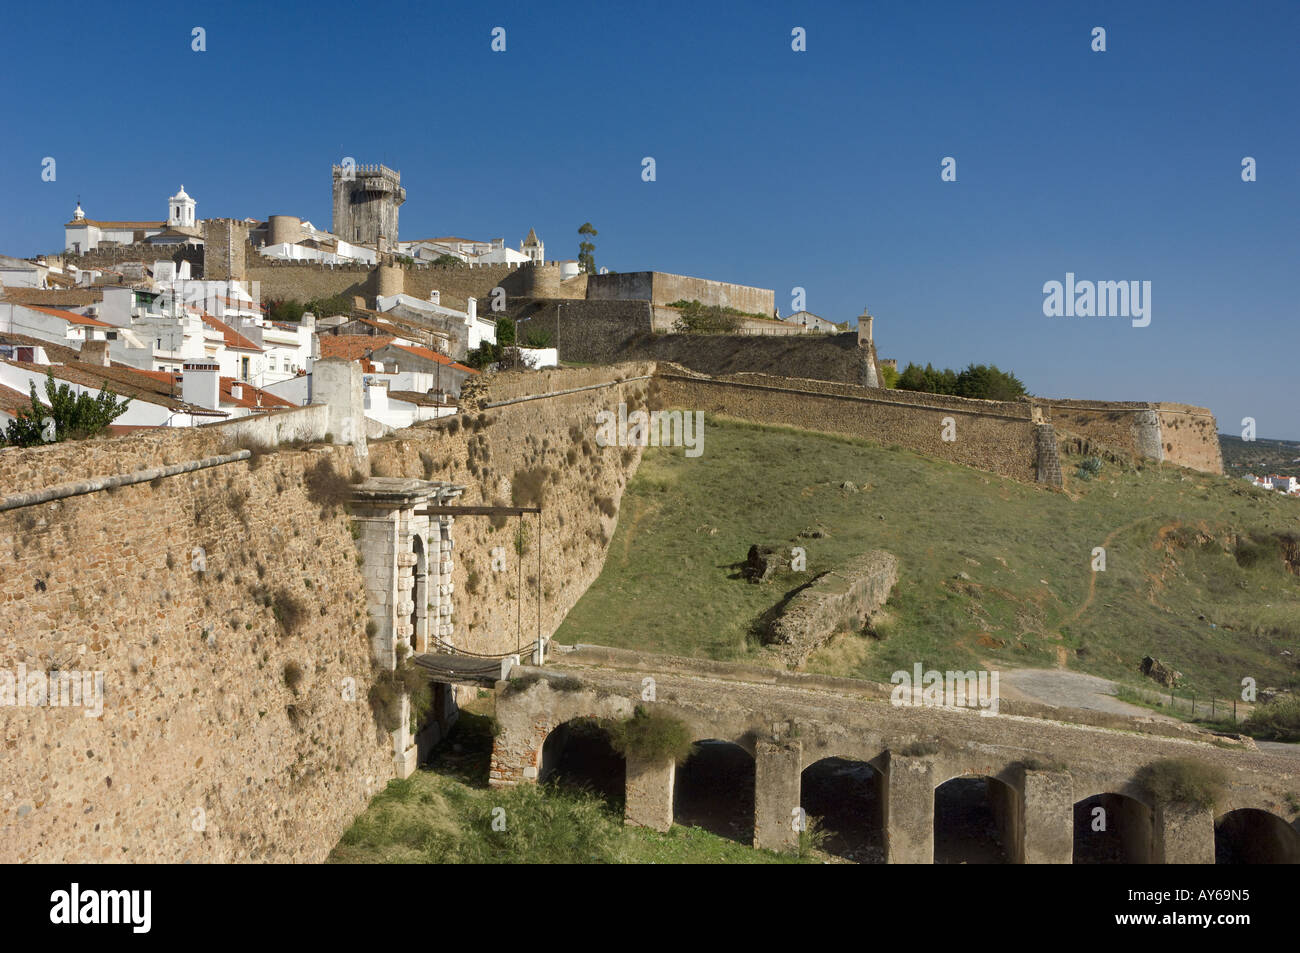 Portugal the Alentejo, Estremoz, walled medieval city Stock Photo